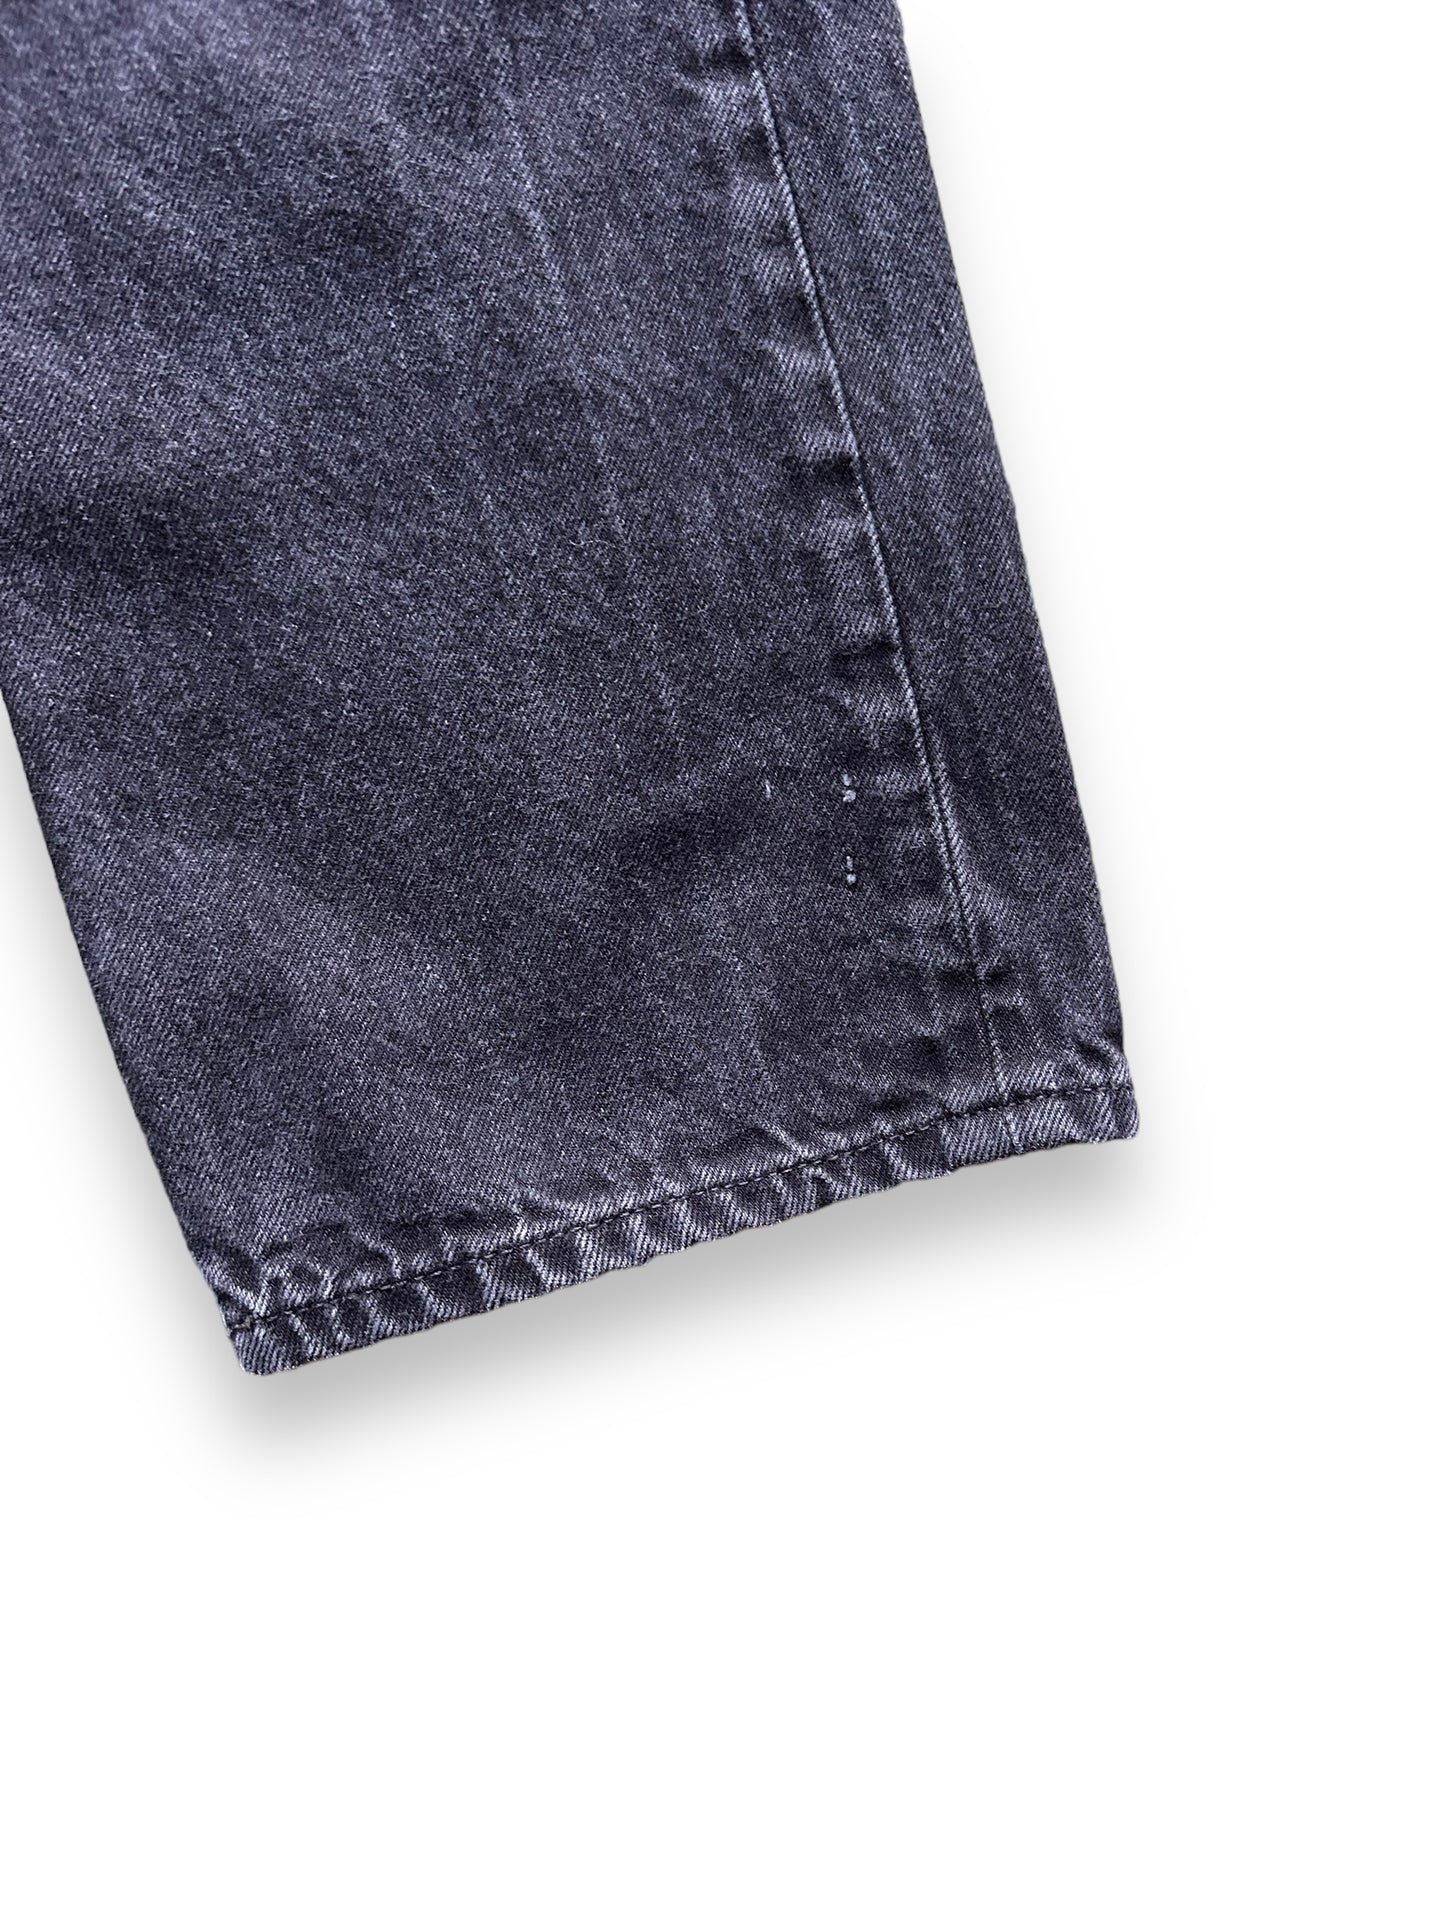 Small Nicks on Legs near cuff on Black Filson Jeans W31 |  Filson Dungarees | Filson Workwear Seattle